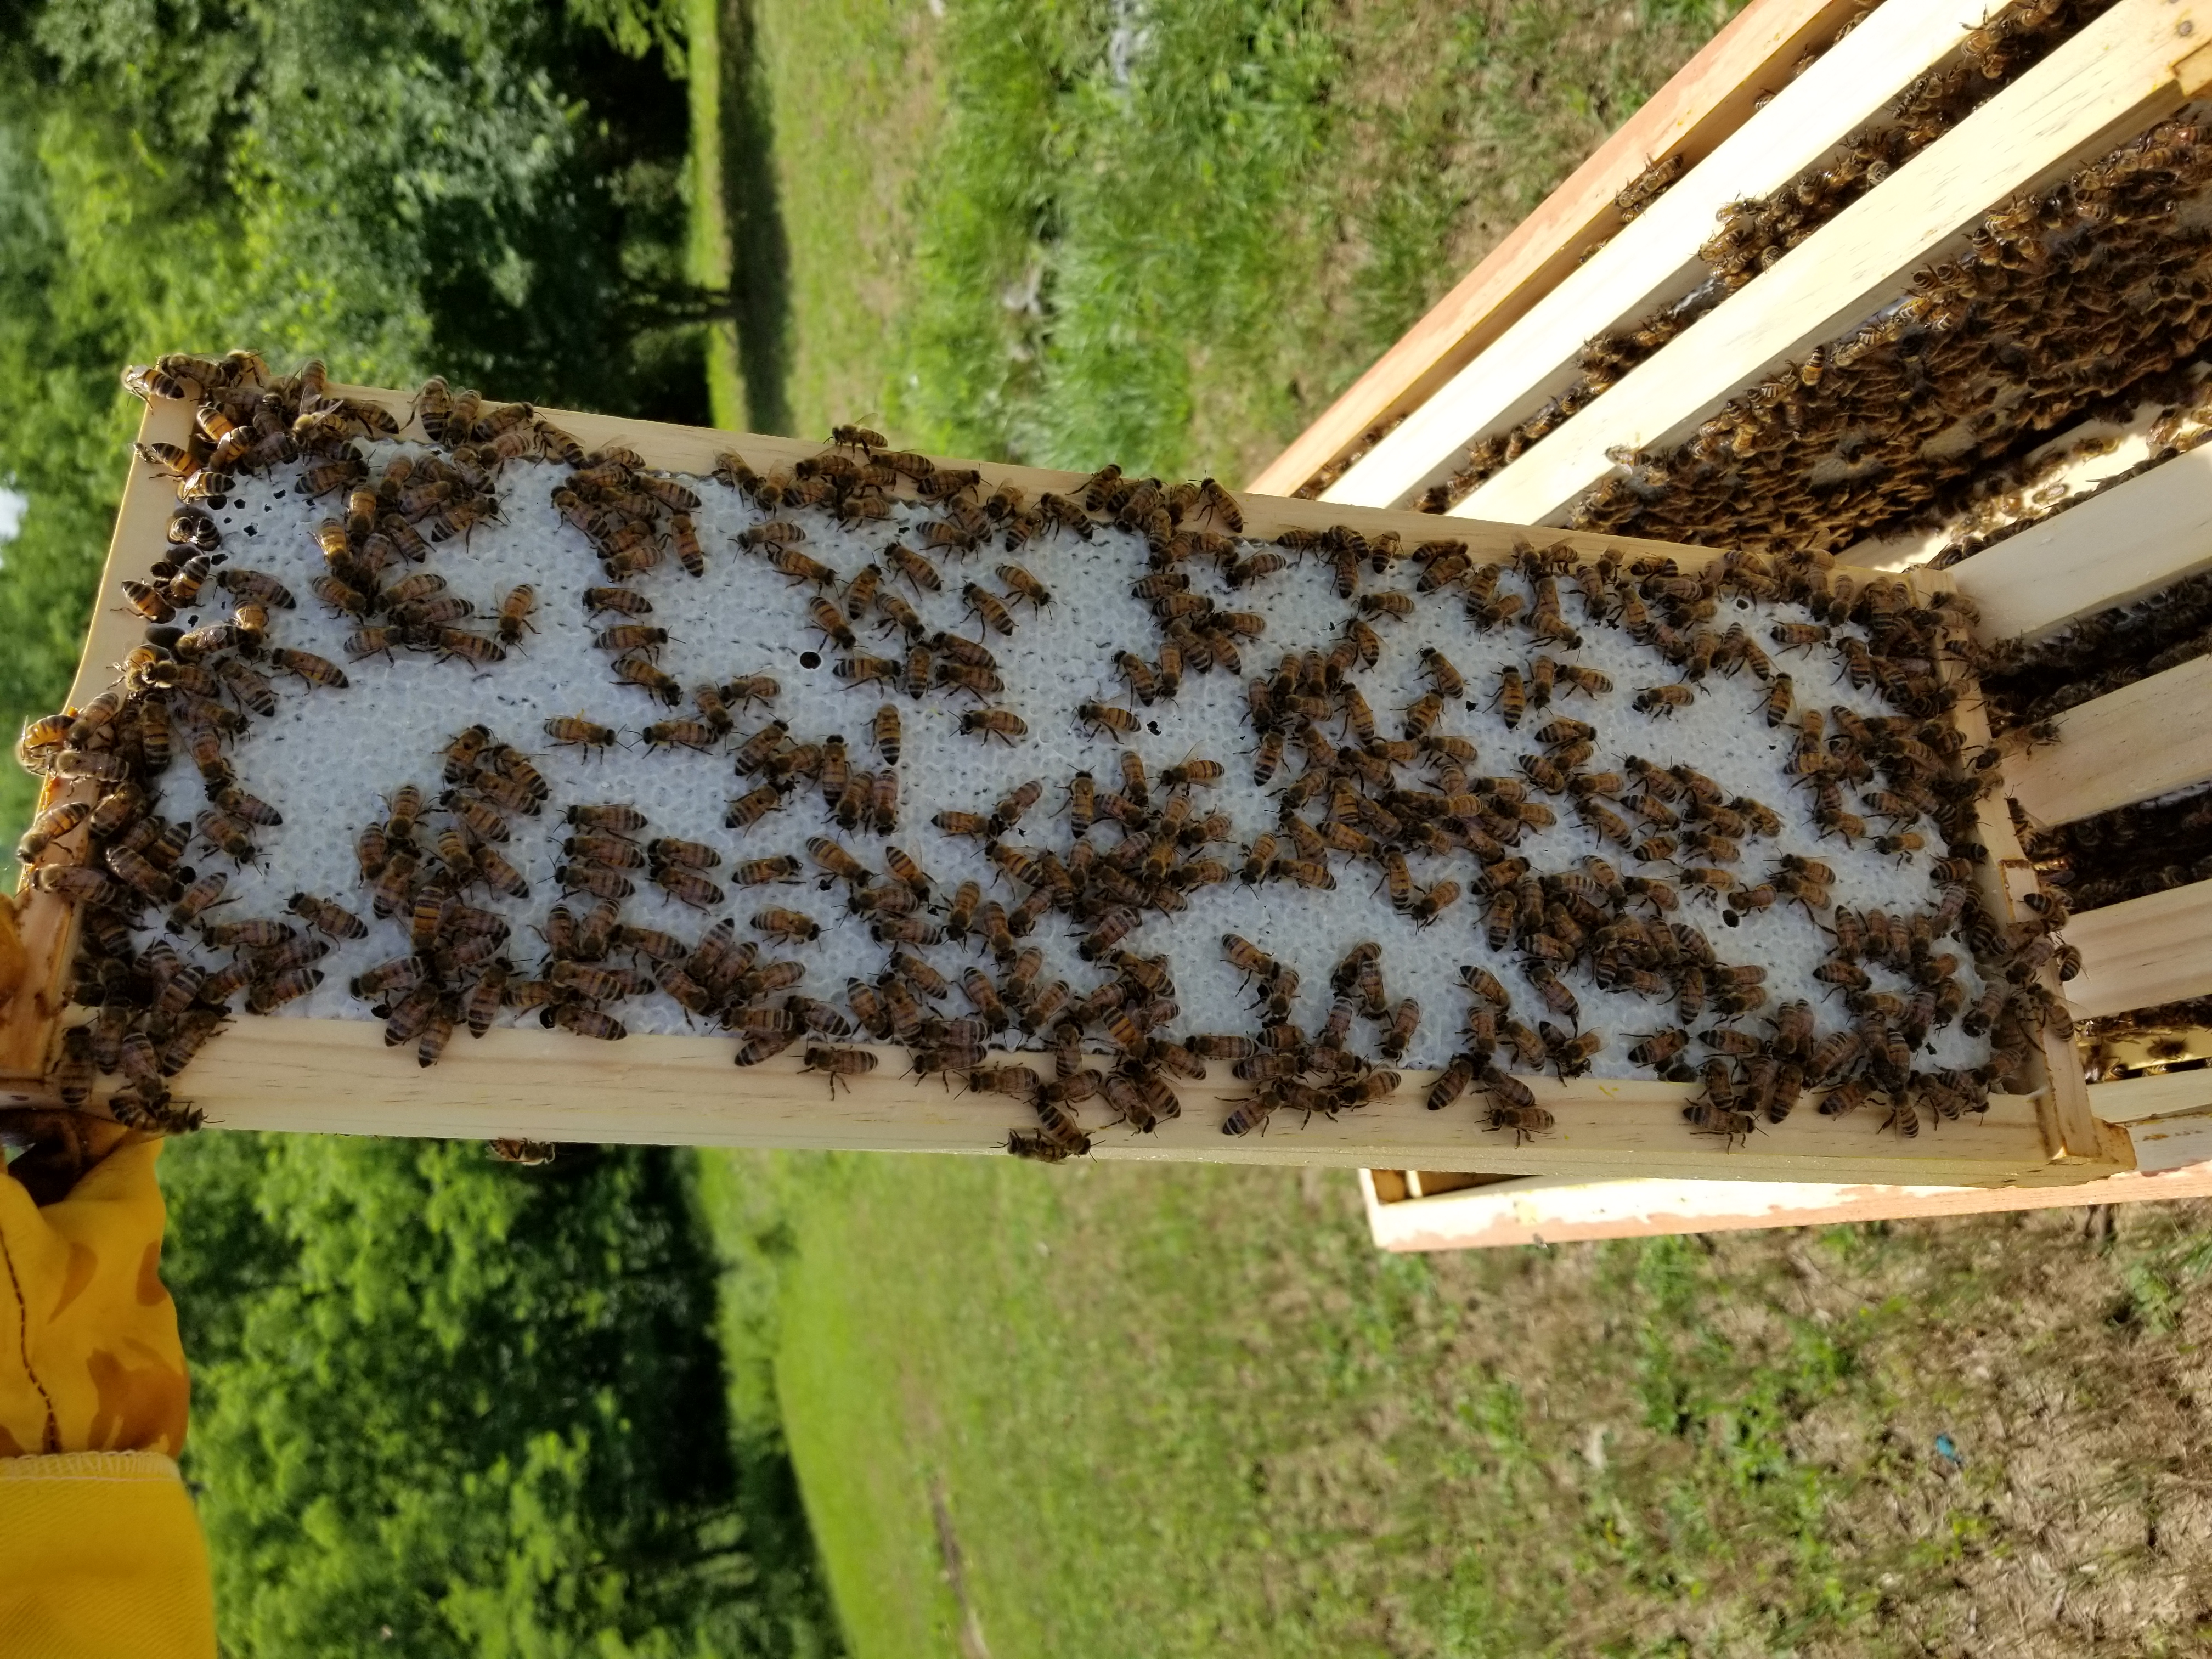 Bee Hind Honey